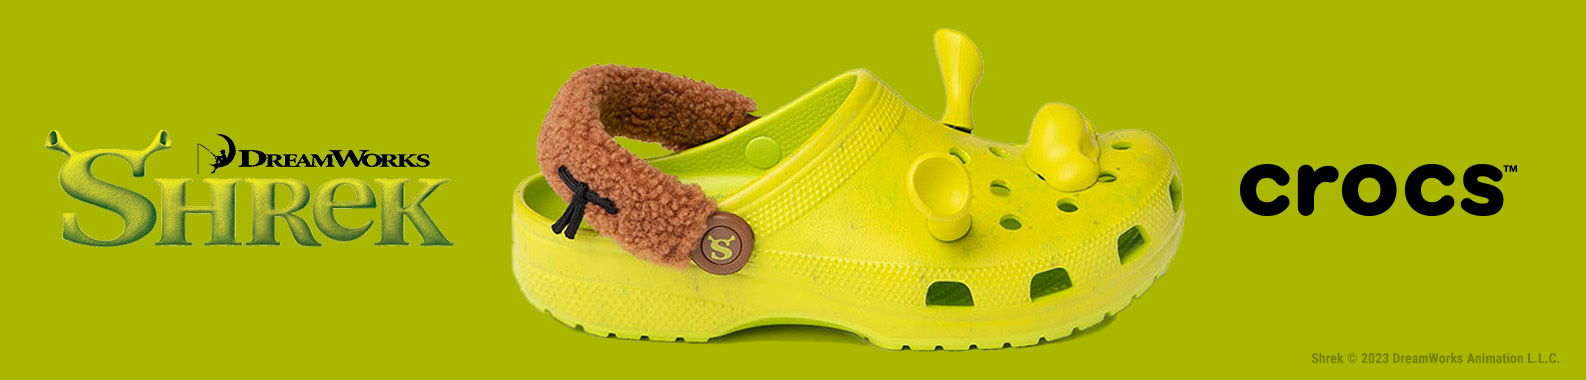 Crocs brand header image